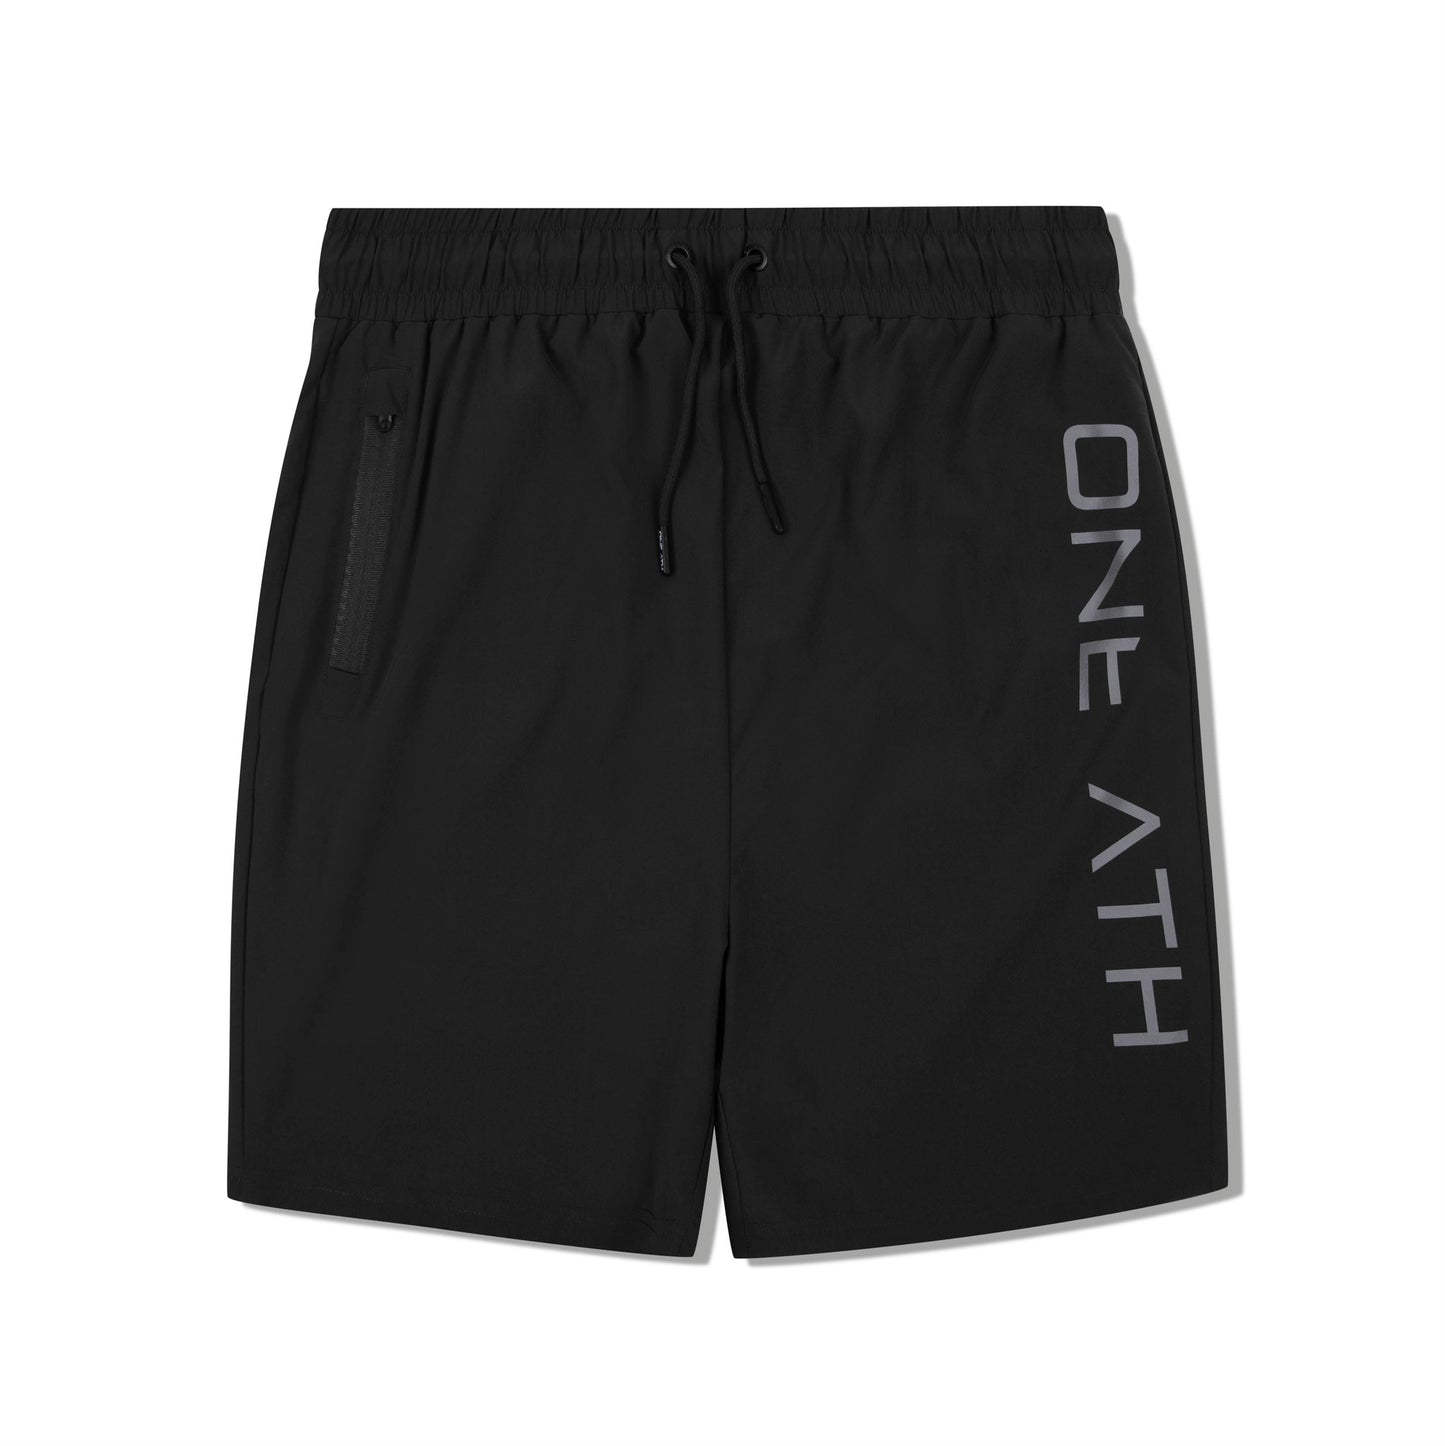 Mtech Run Shorts - Black